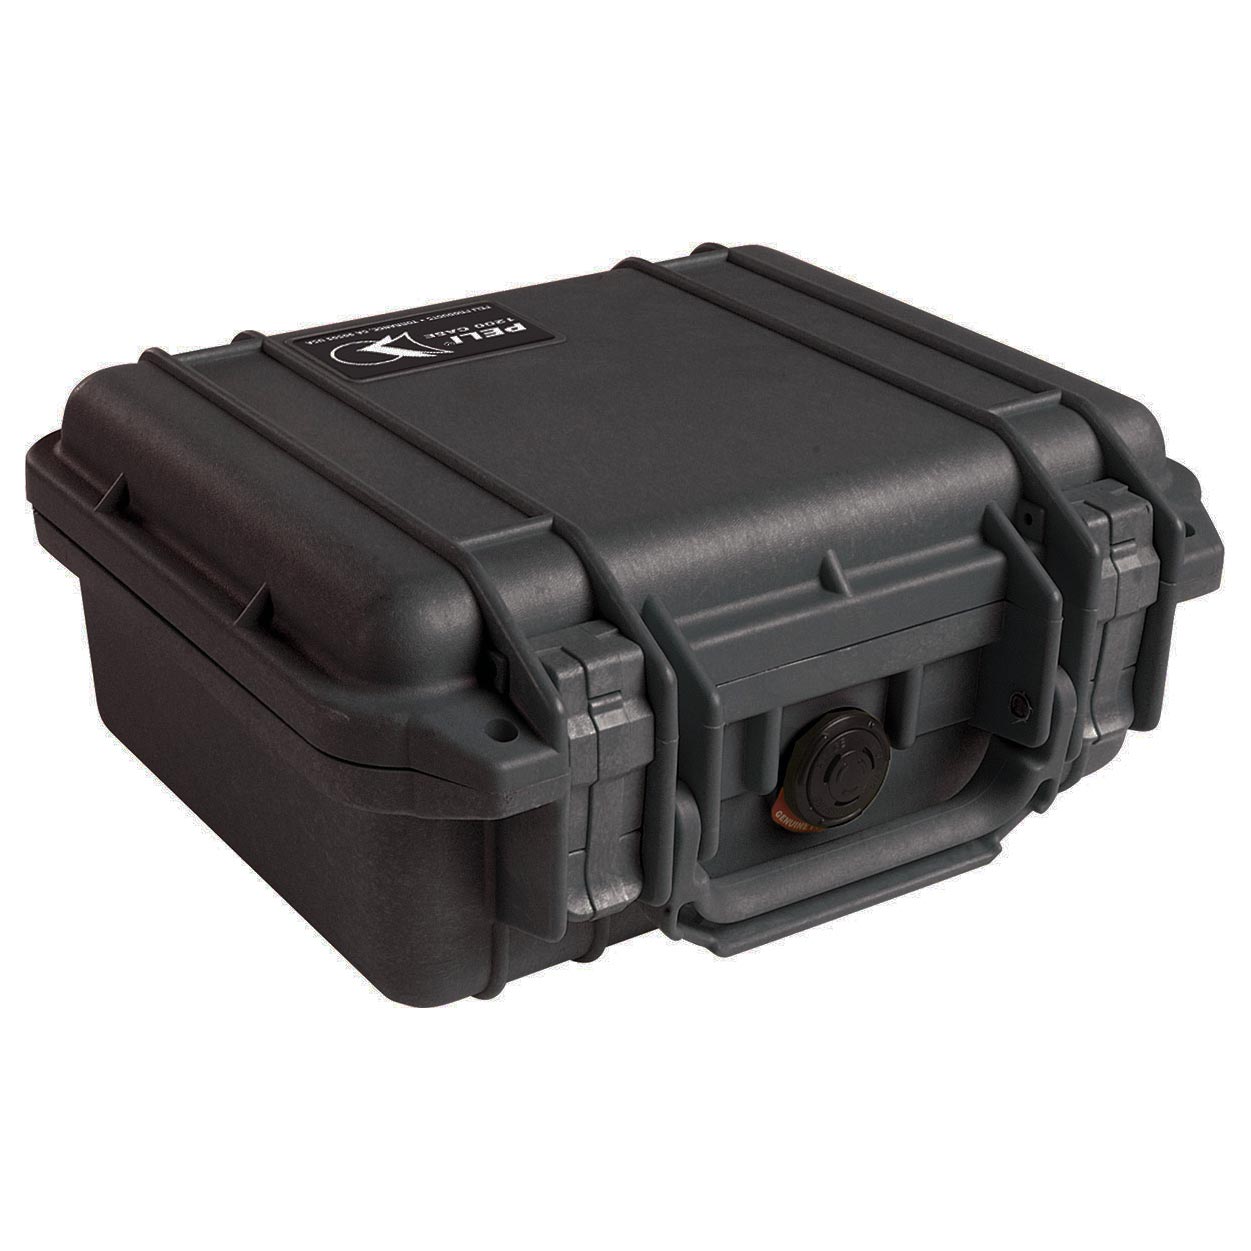 Peli 1200 Protector Case Black - Battery Box EMTB 